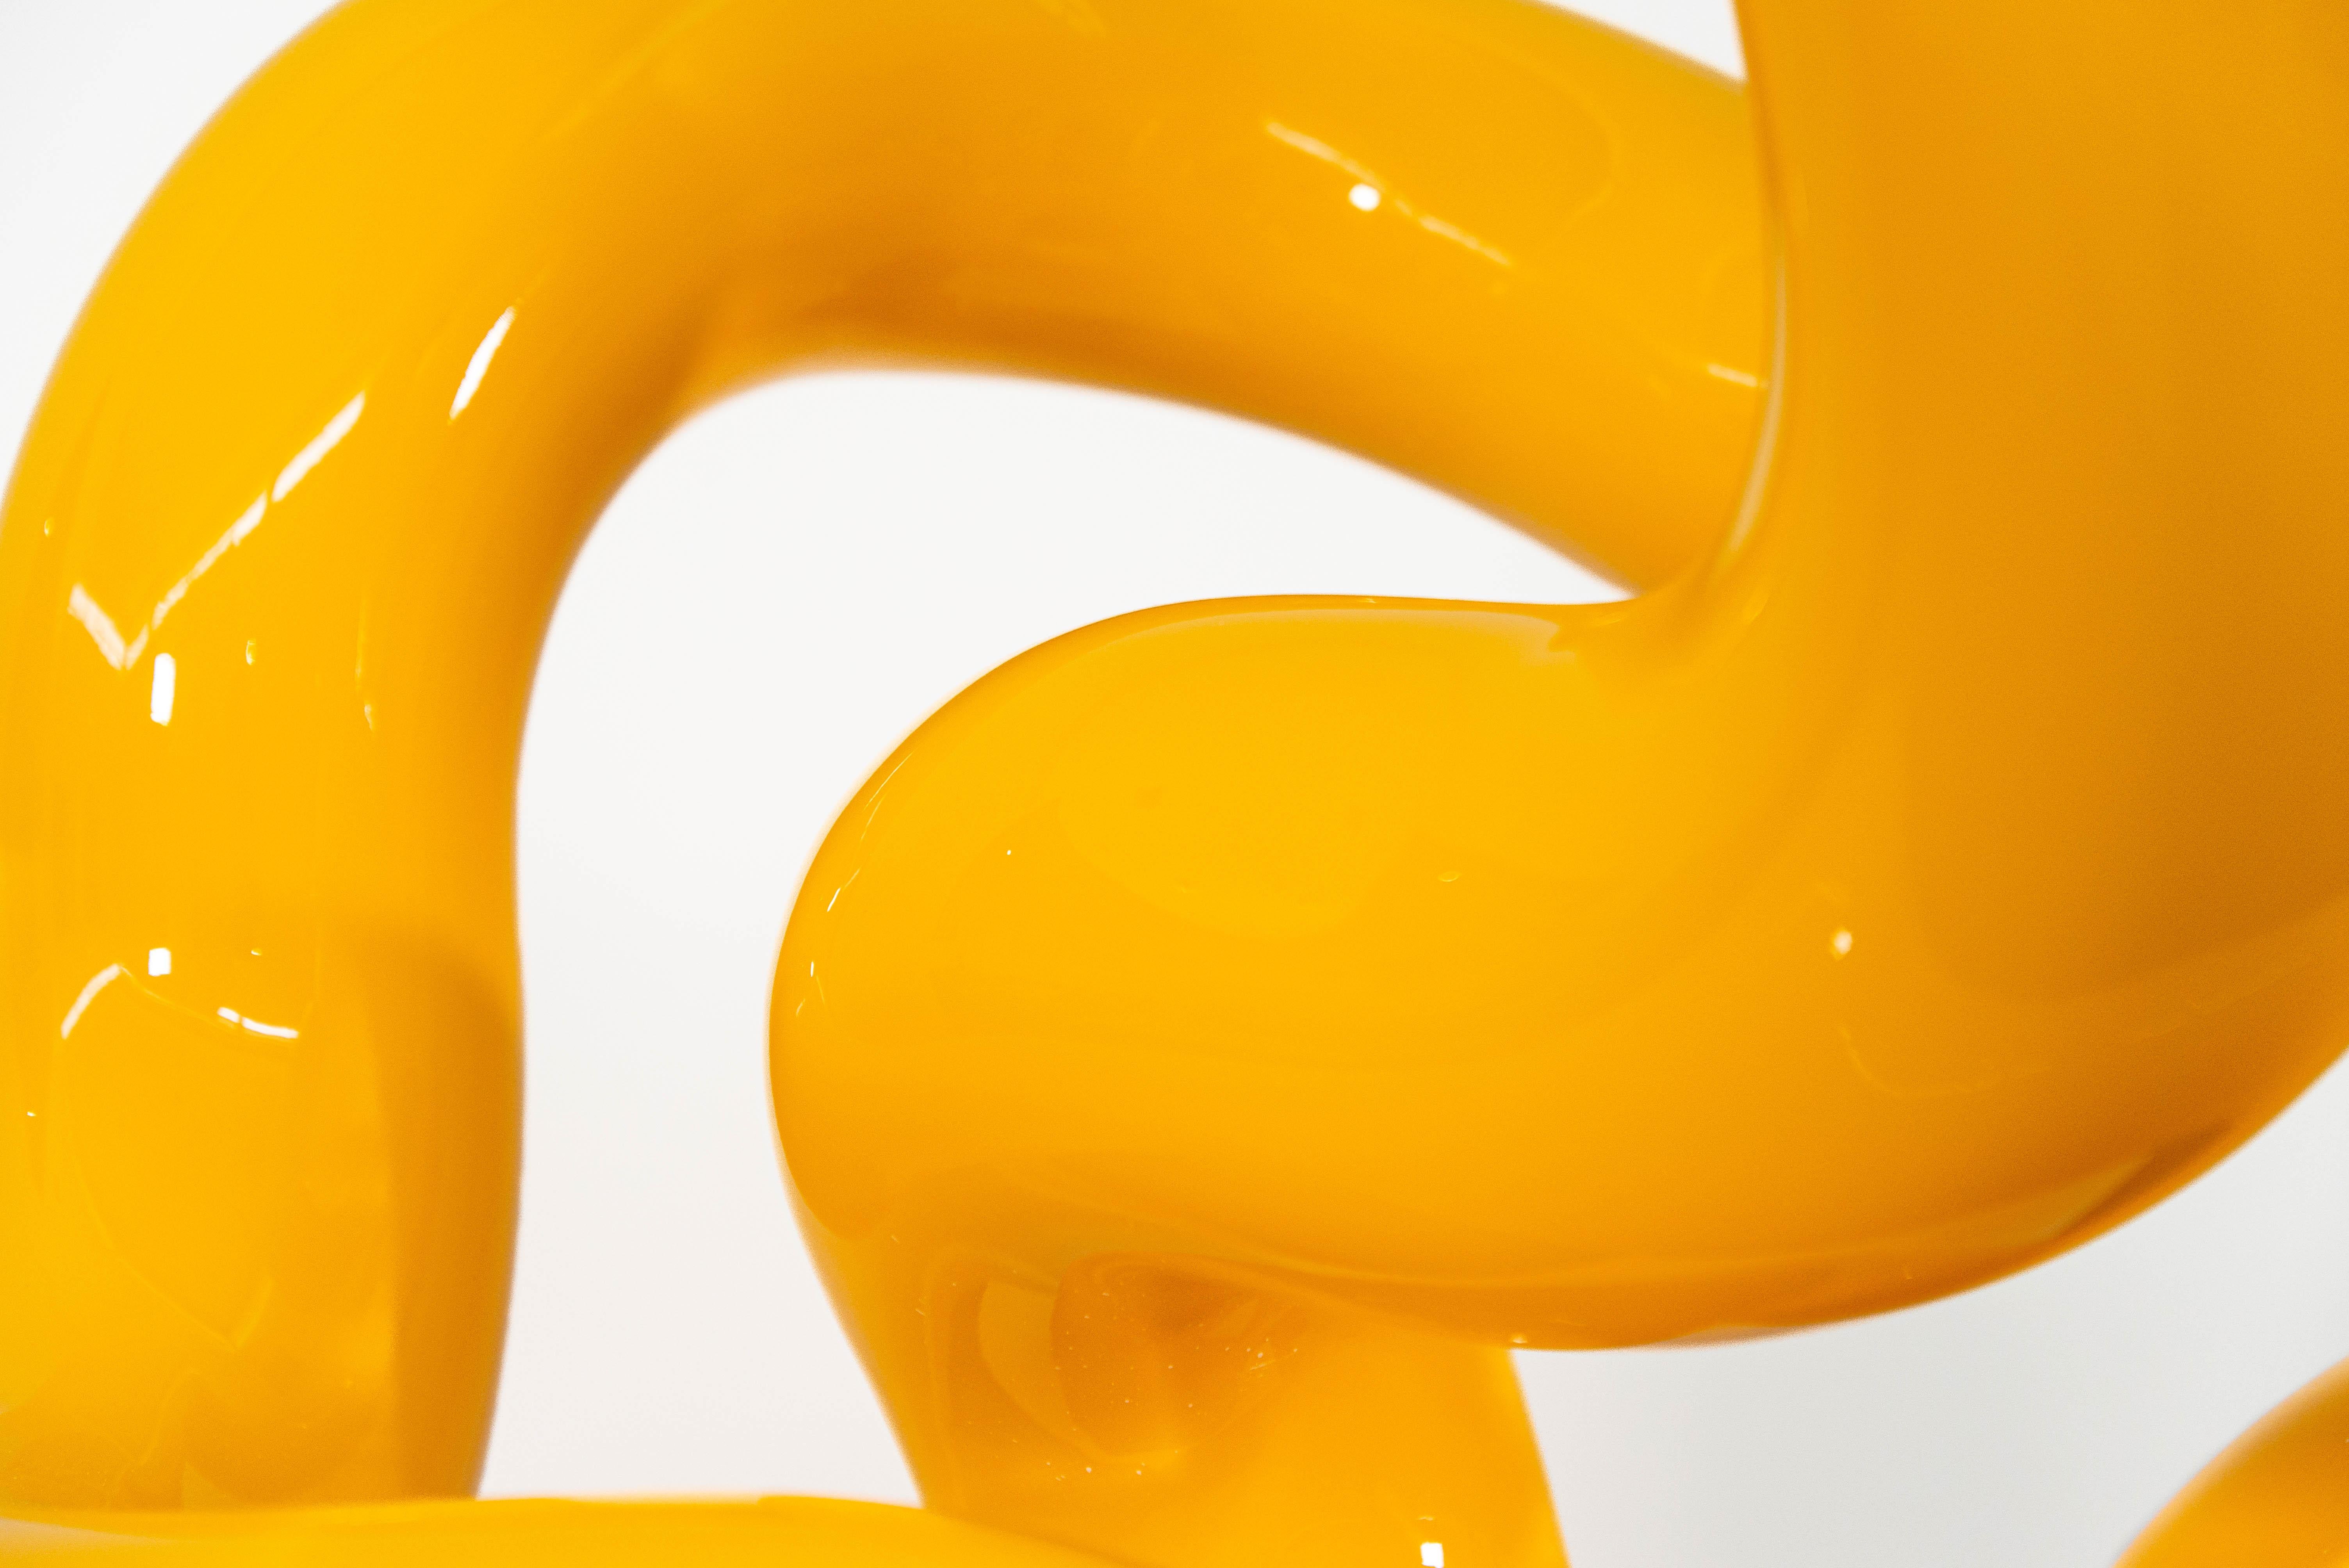 Circuit jaune - sculpture en acier inoxydable poli, abstraite et peinte en vente 2